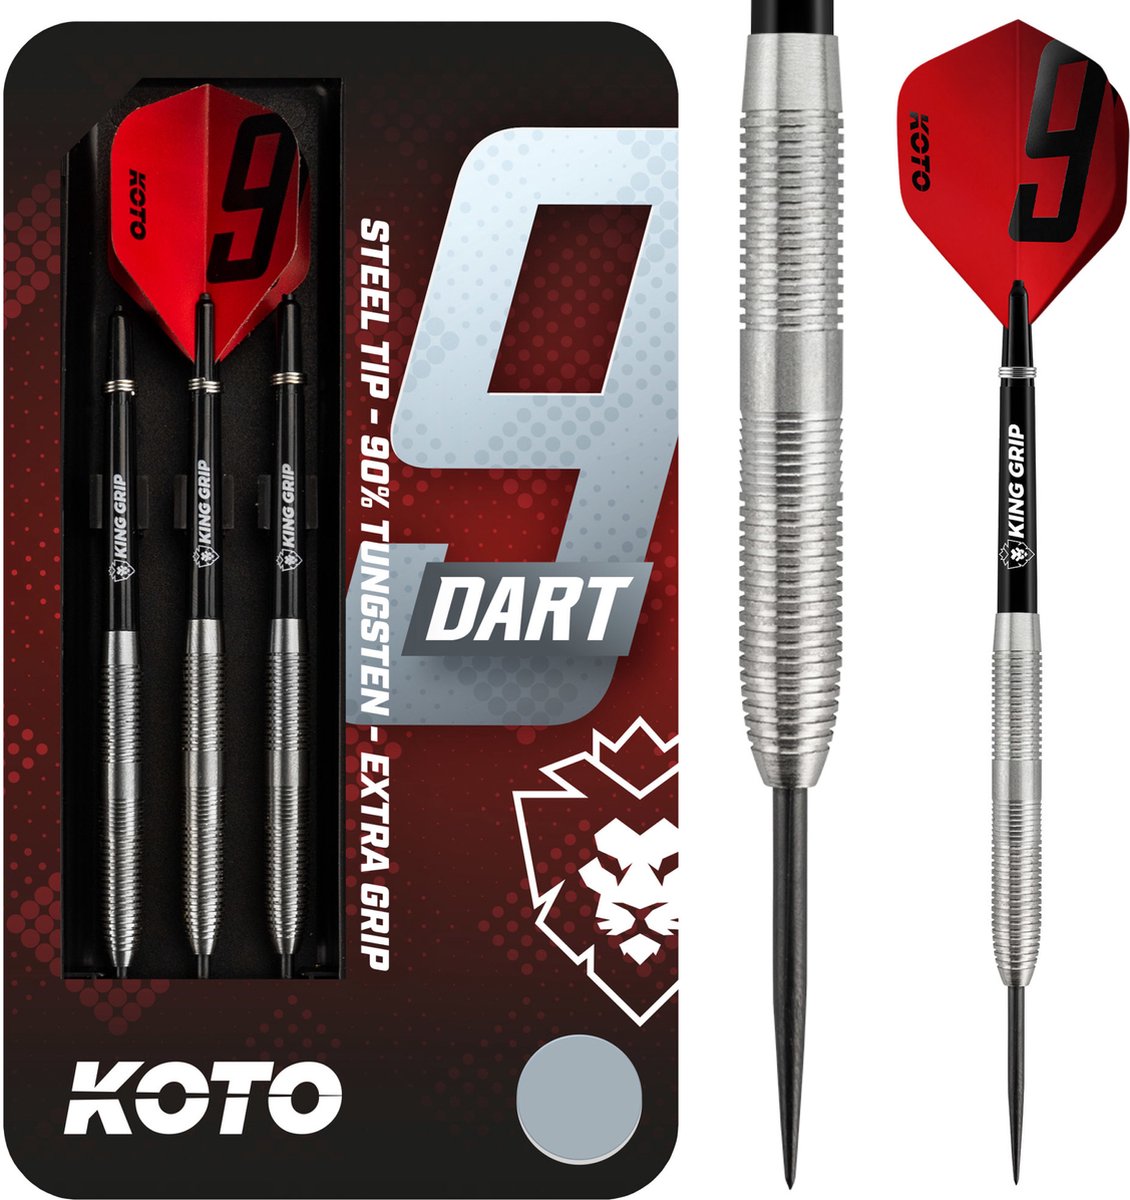 KOTO 9-Dart 90% - Dartpijlen - 25 Gram - Tungsten Darts - 3 Pijlen - Dartset - Met Dartcase